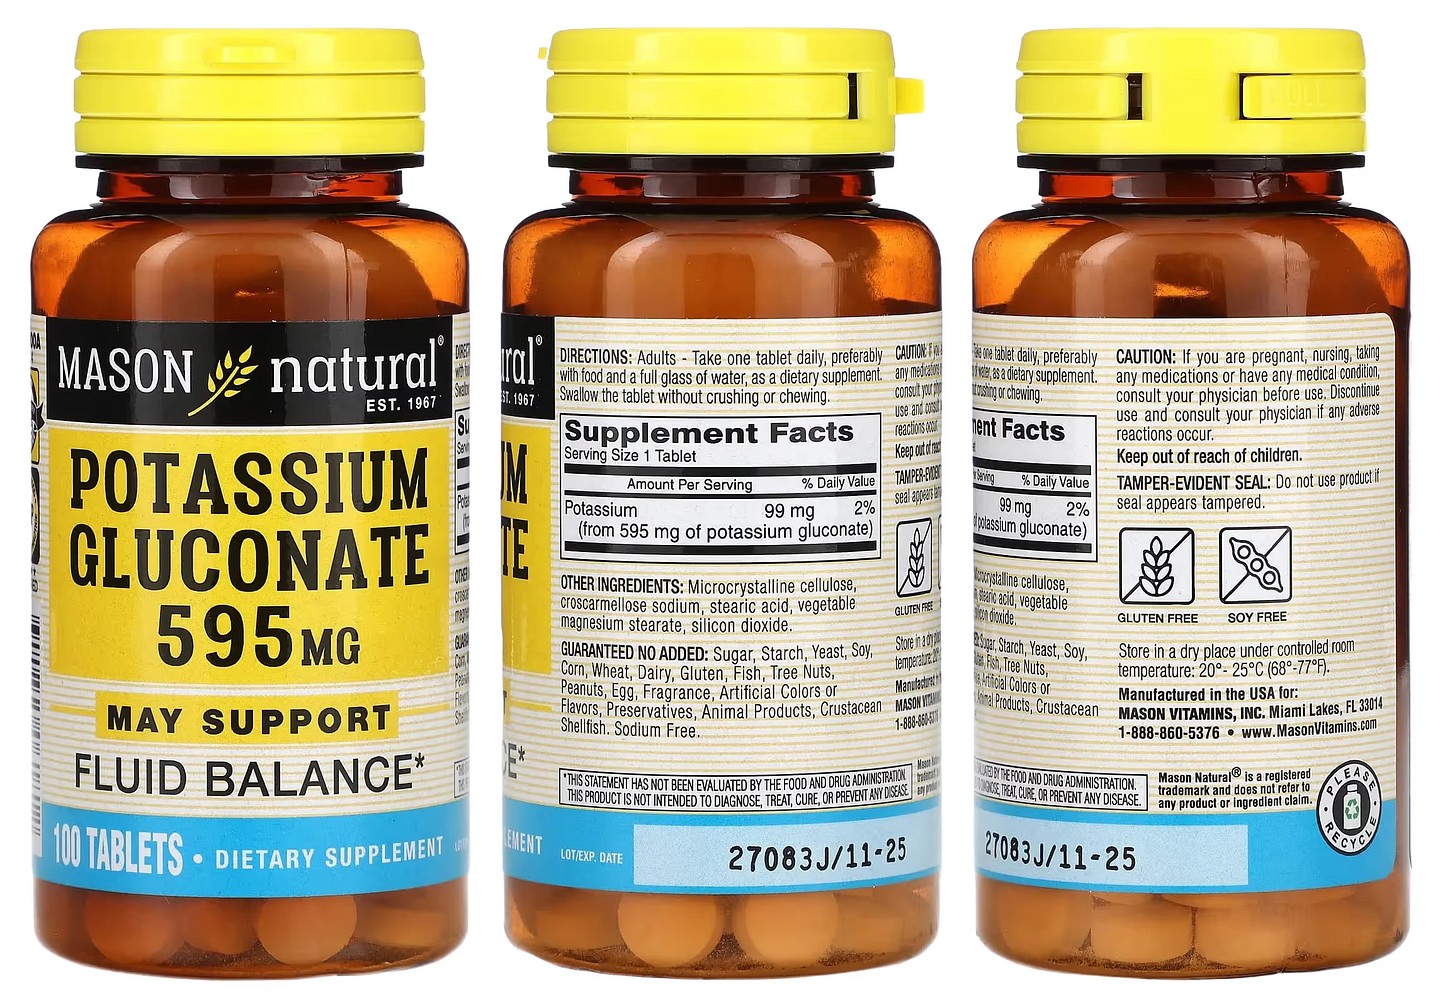 Mason Natural, Potassium Gluconate packaging